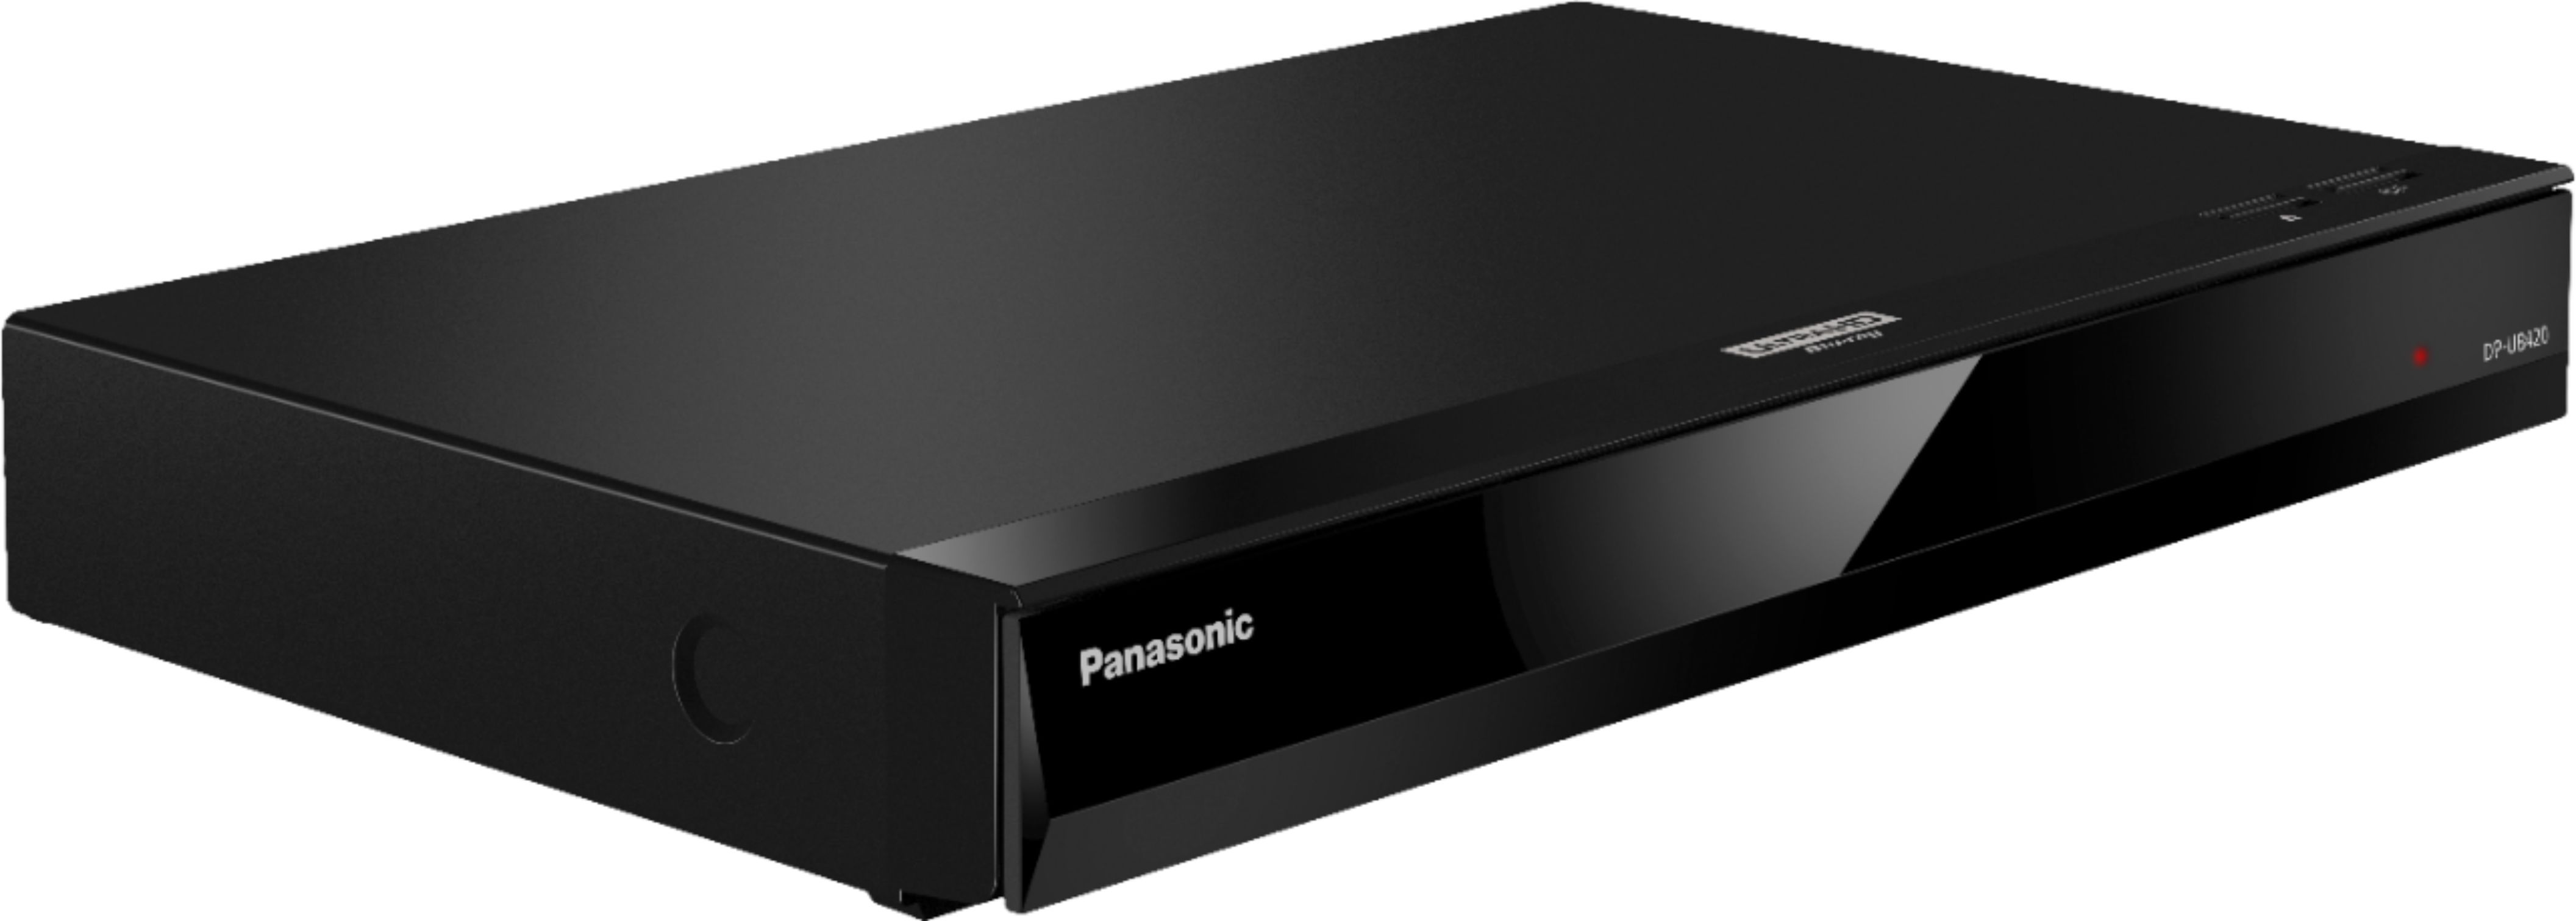 Panasonic 4K Blu-ray Player with Ultra HD Premium Video Playback